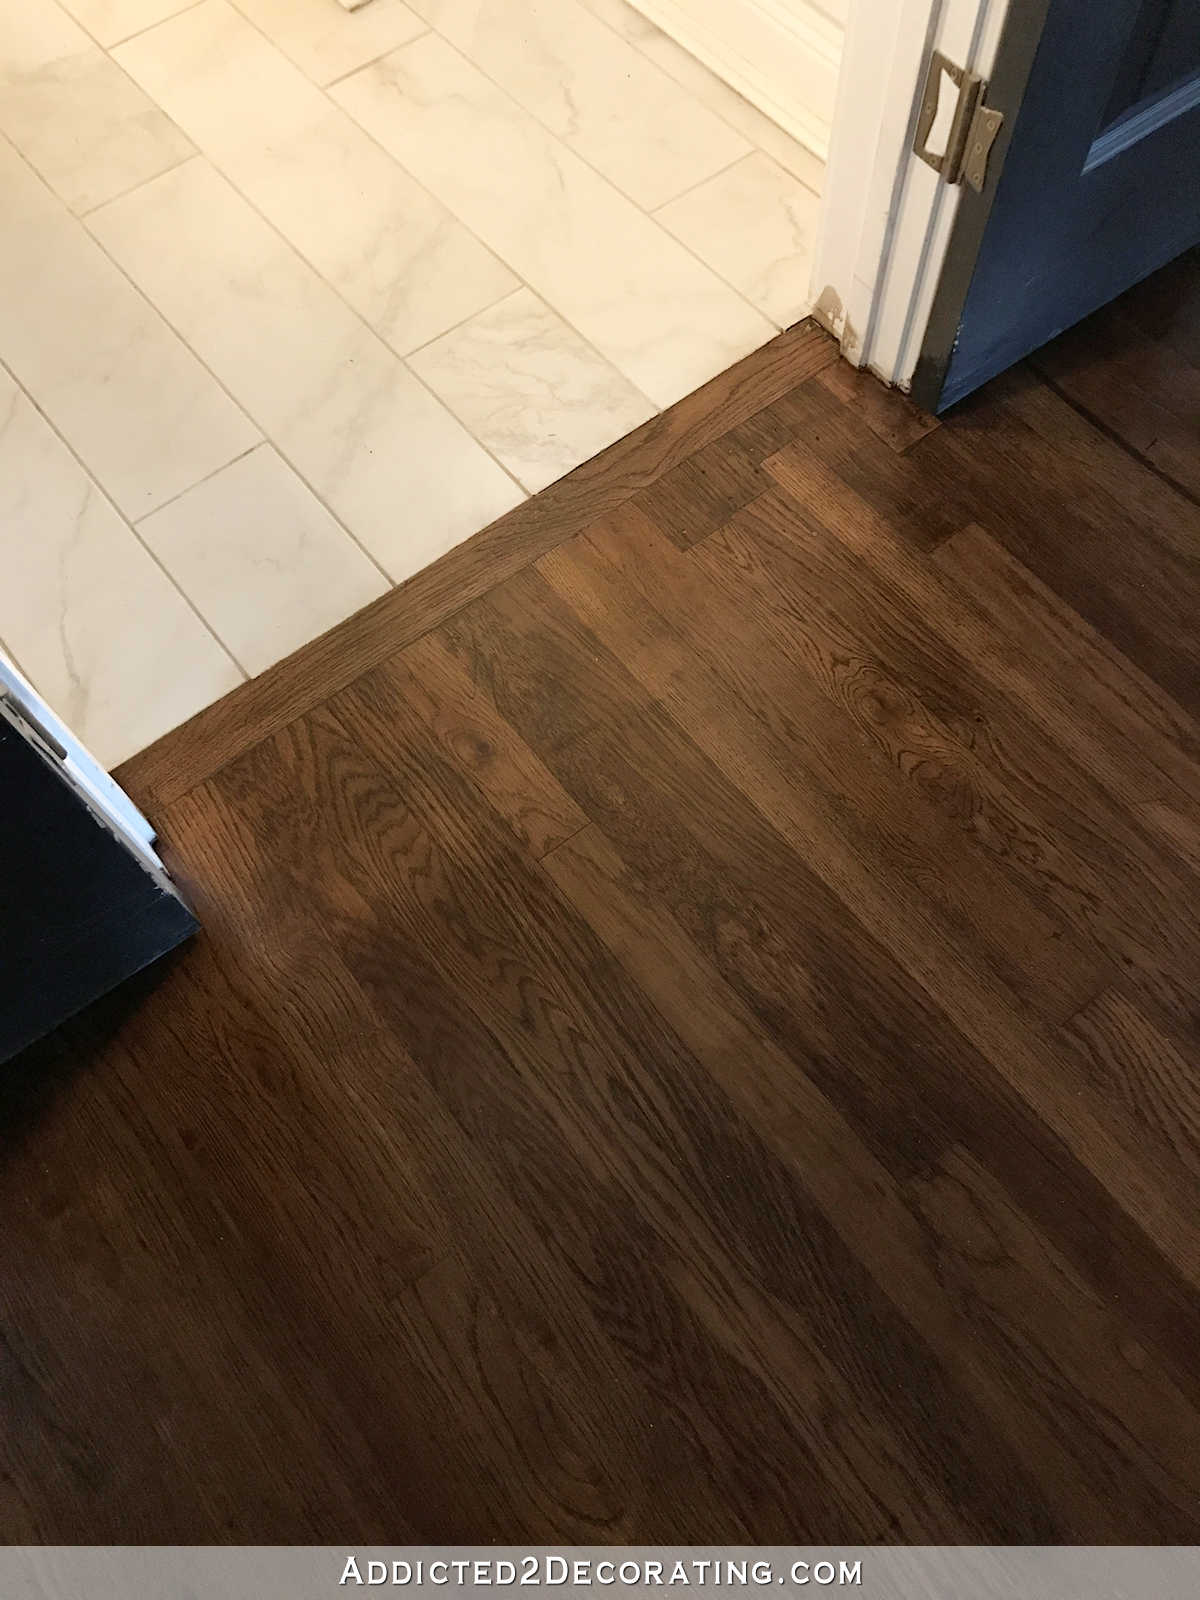 refinished red oak hardwood floors - transition between hallway and tiled bathroom floor